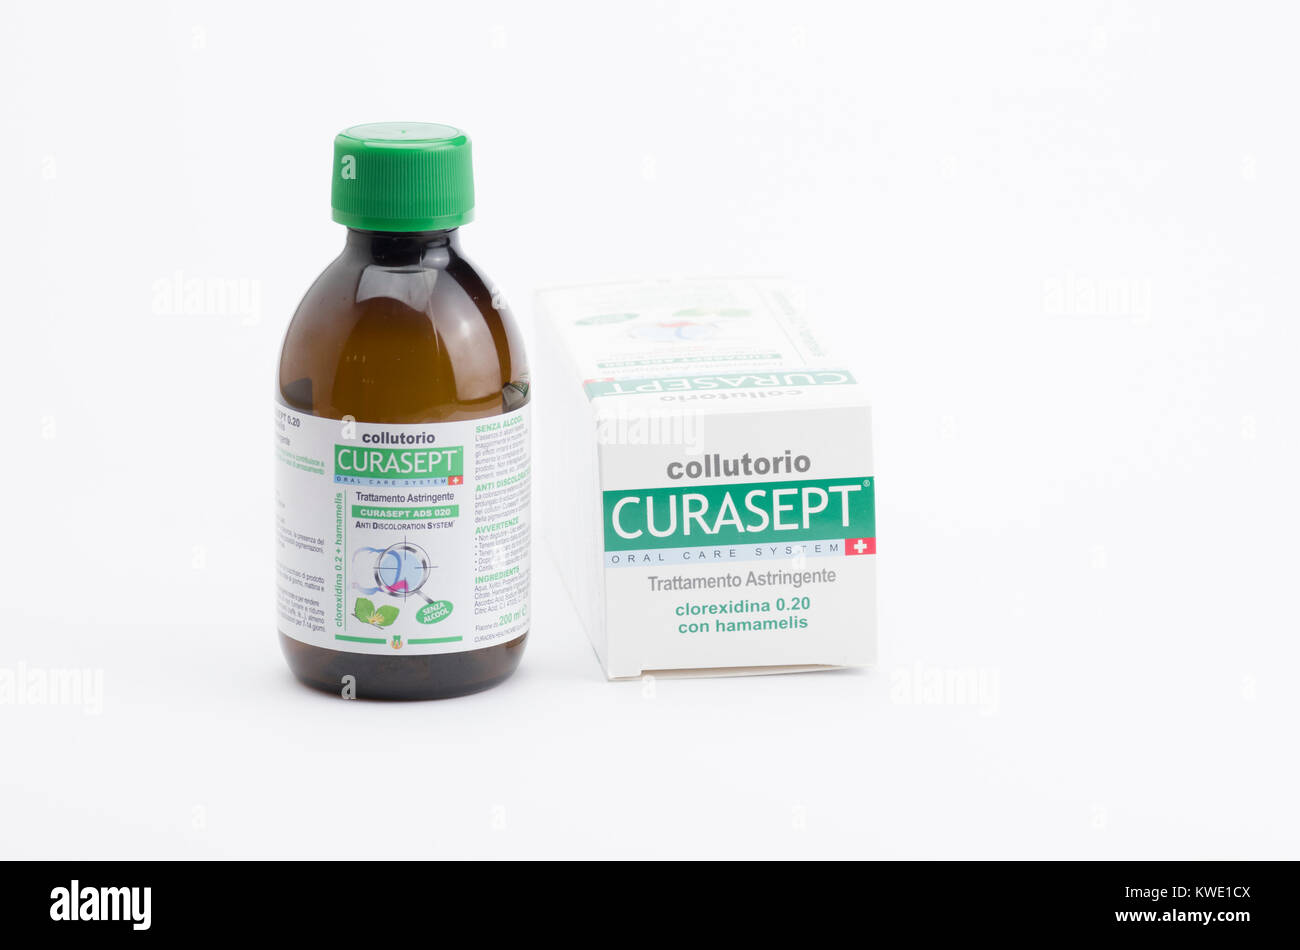 Clorexidina CURASEPT cura orale colluttorio con hamamelis - sfondo bianco  Foto stock - Alamy